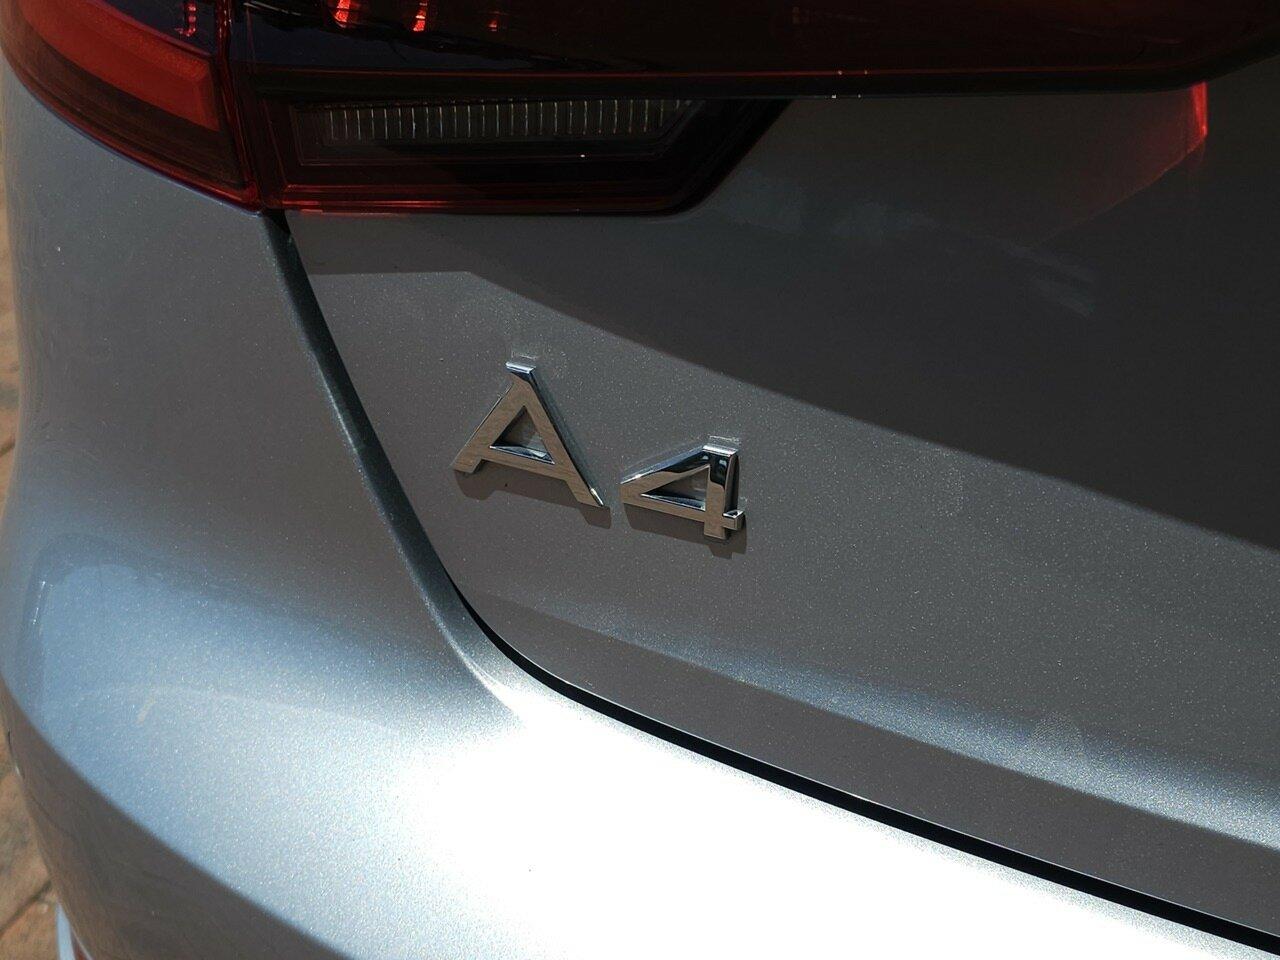 Audi A4 image 3